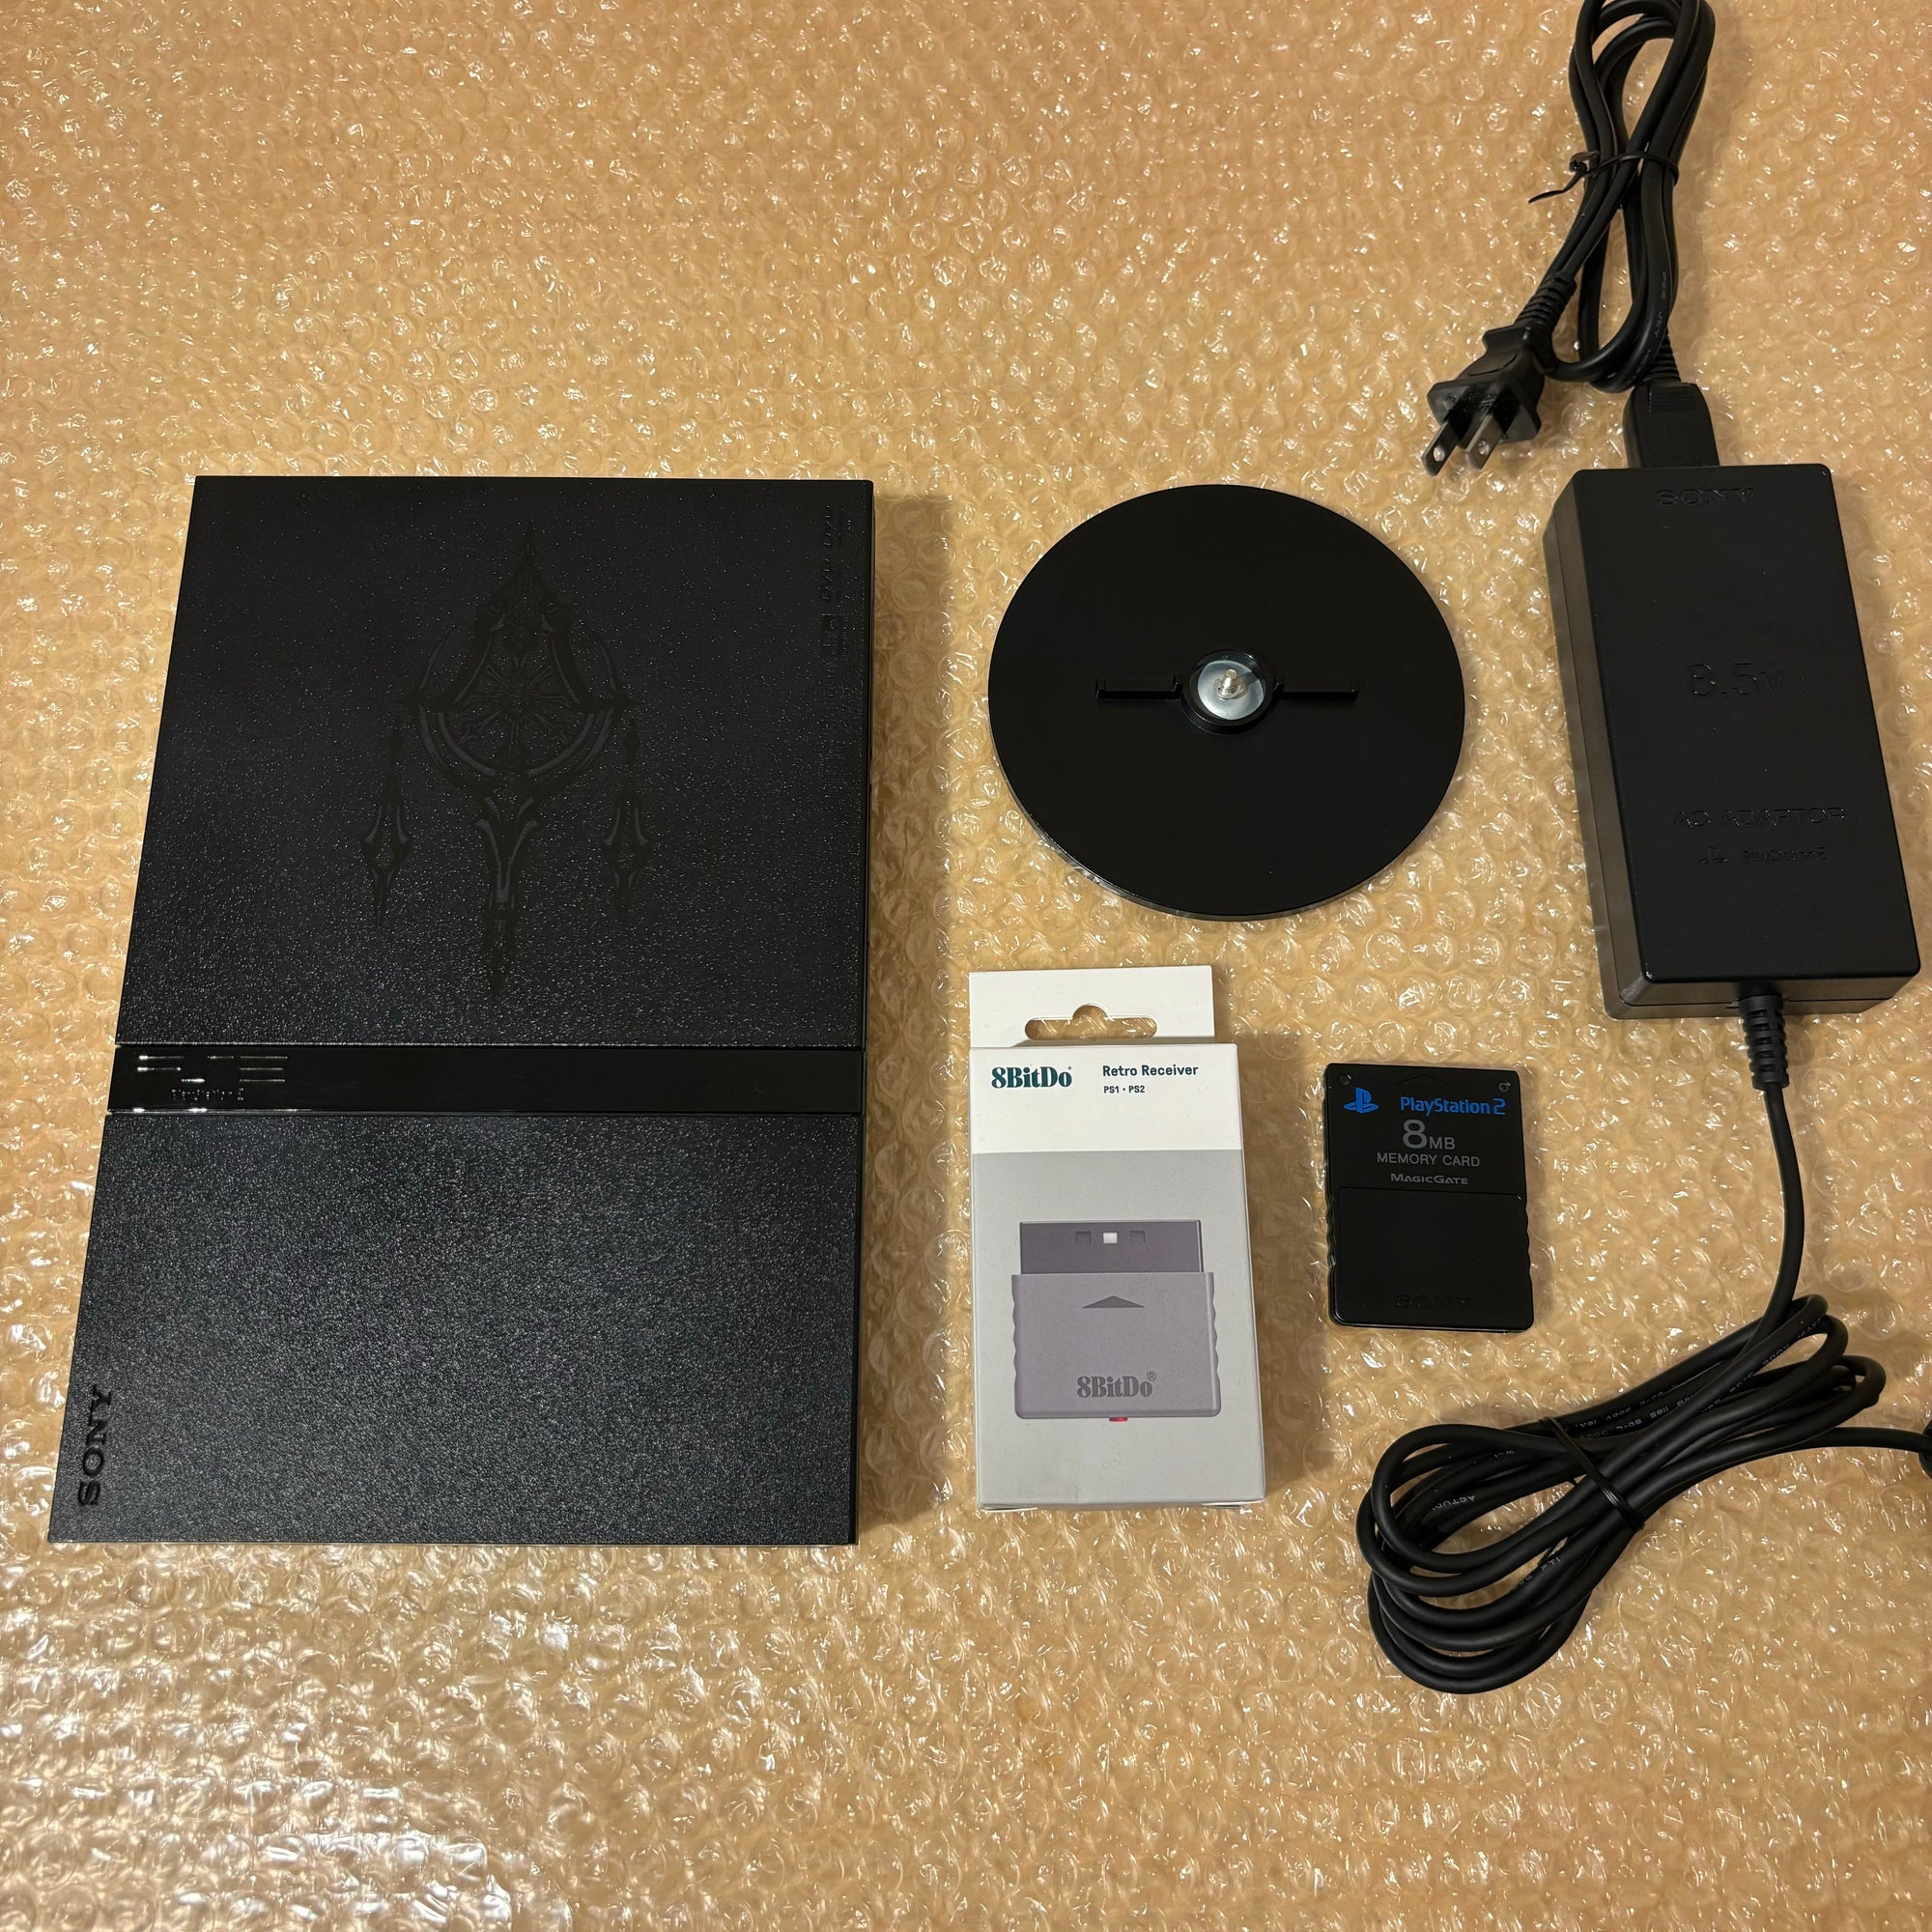 Final Fantasy 12 edition PS2 system set, Region Free with PixelFX GEM kit